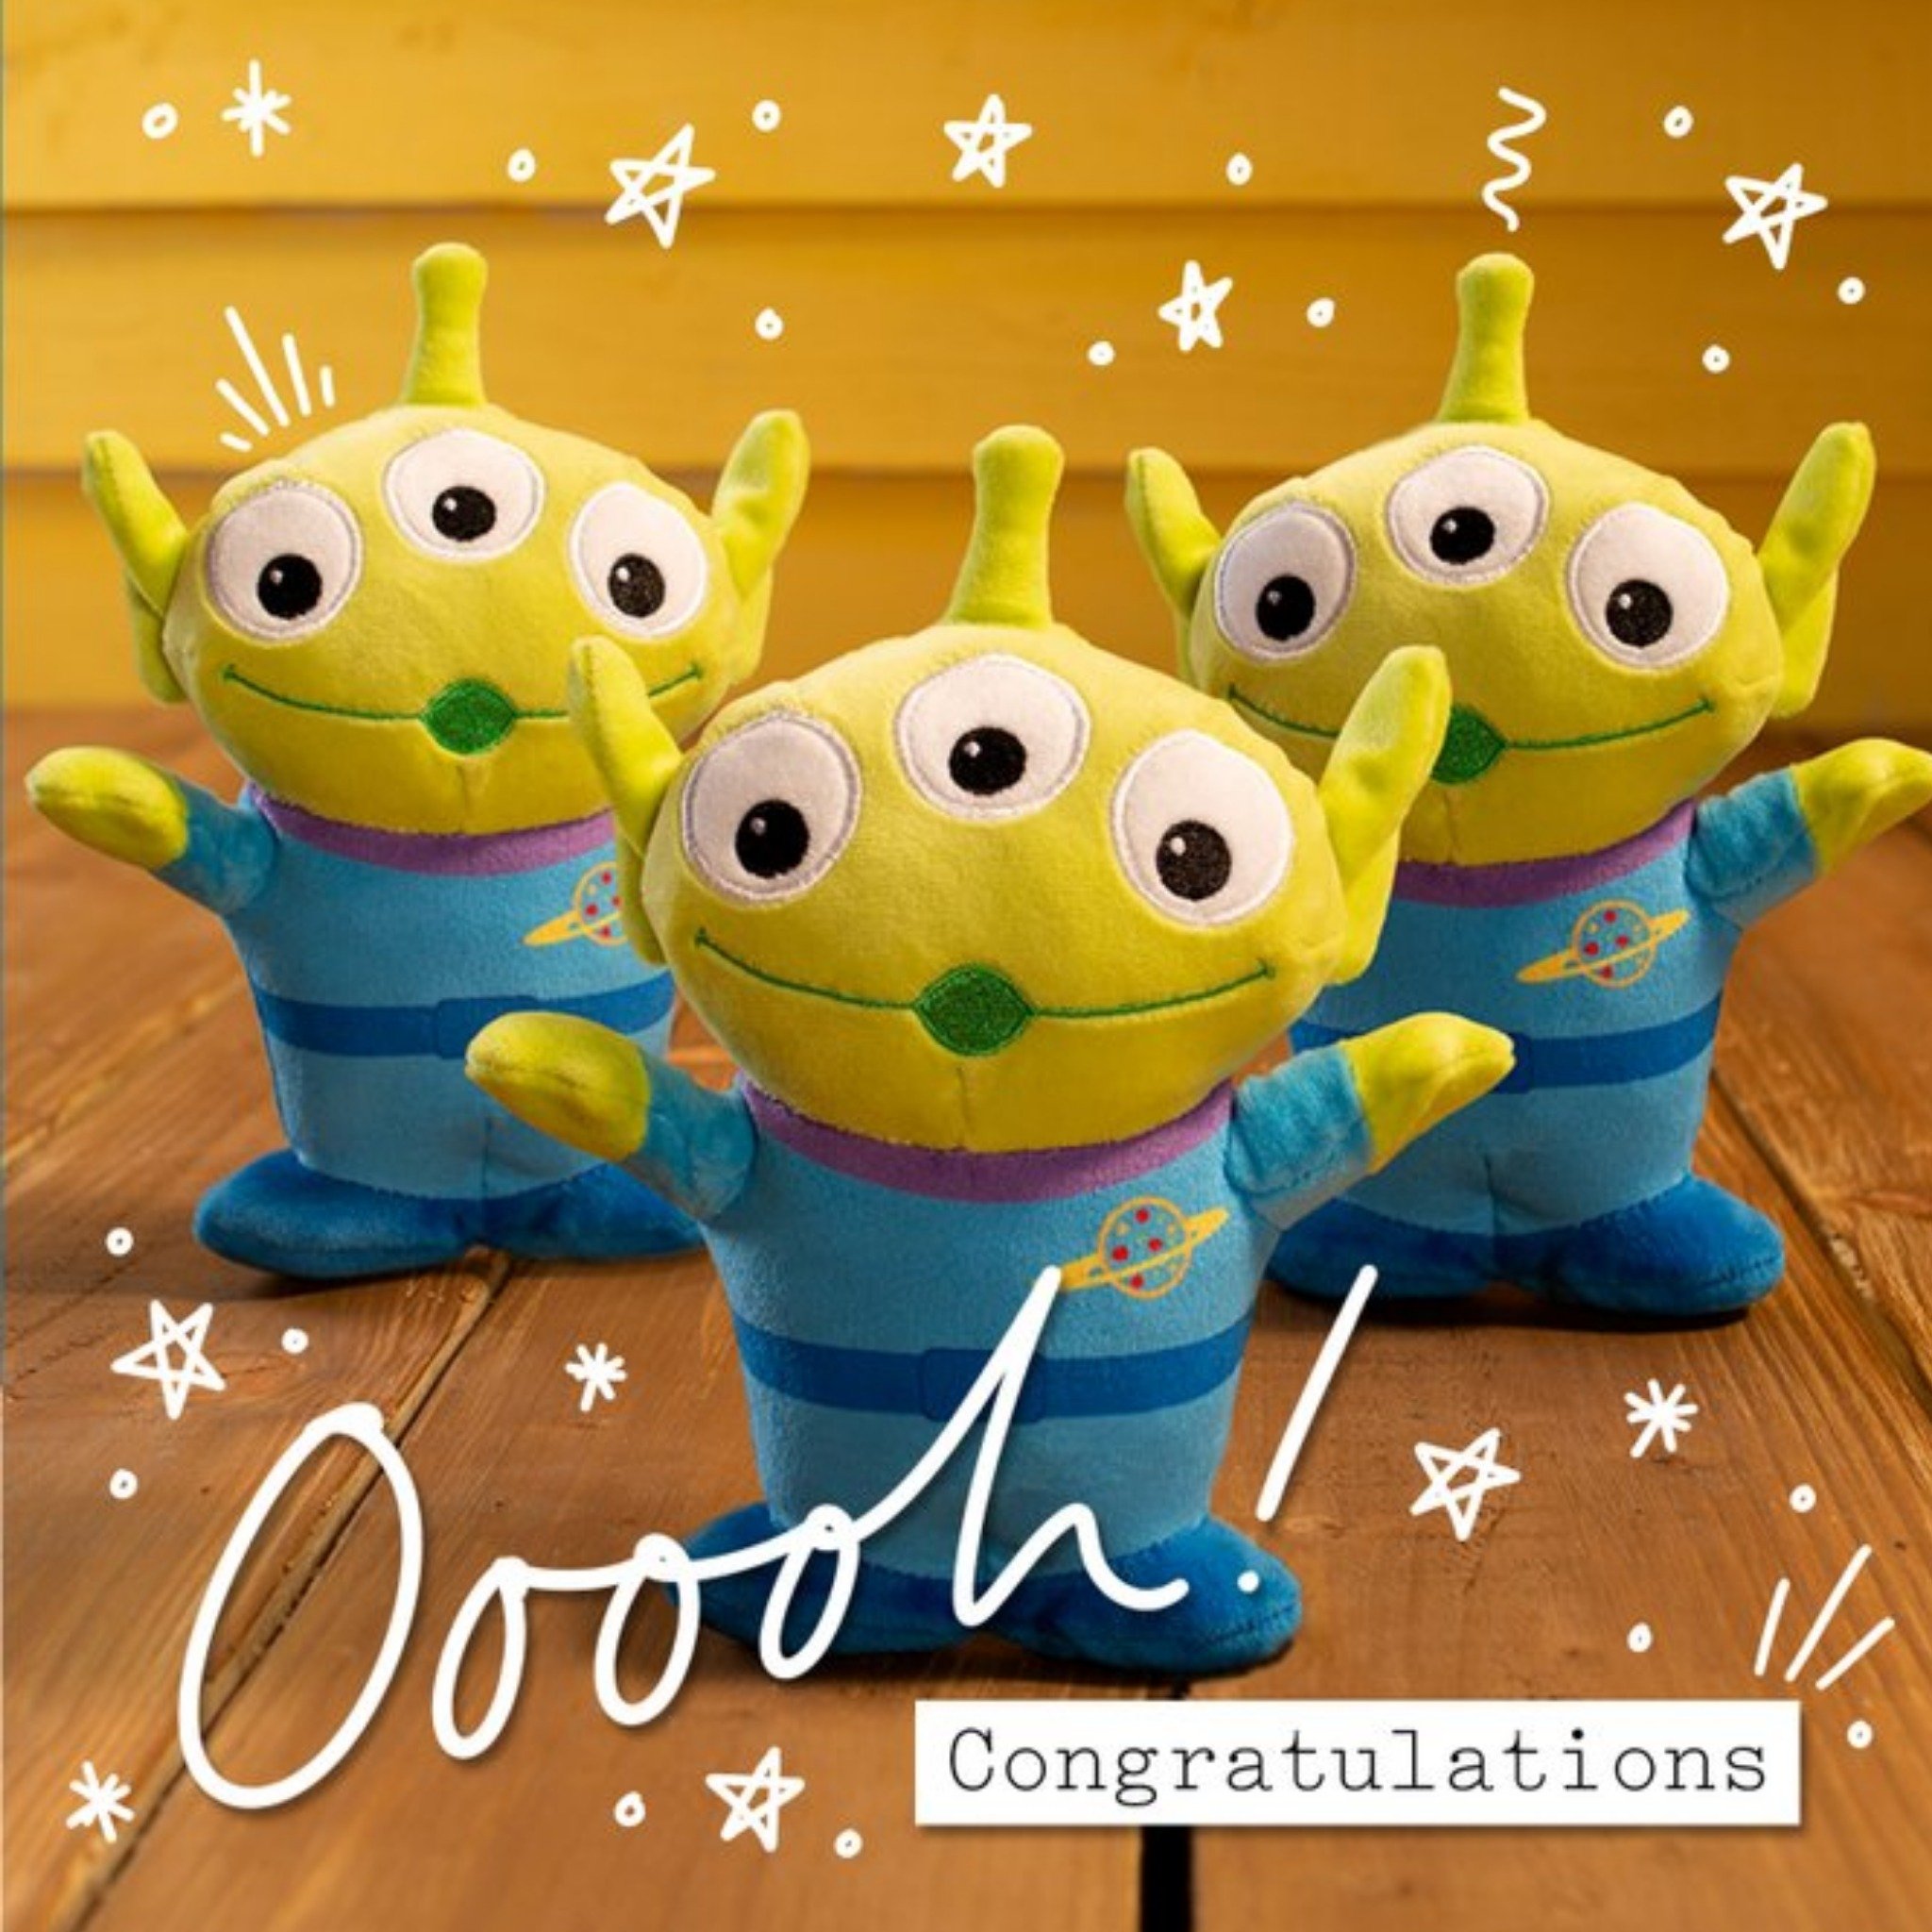 Cute Disney Plush Toy Story Aliens Congratulations Card, Square